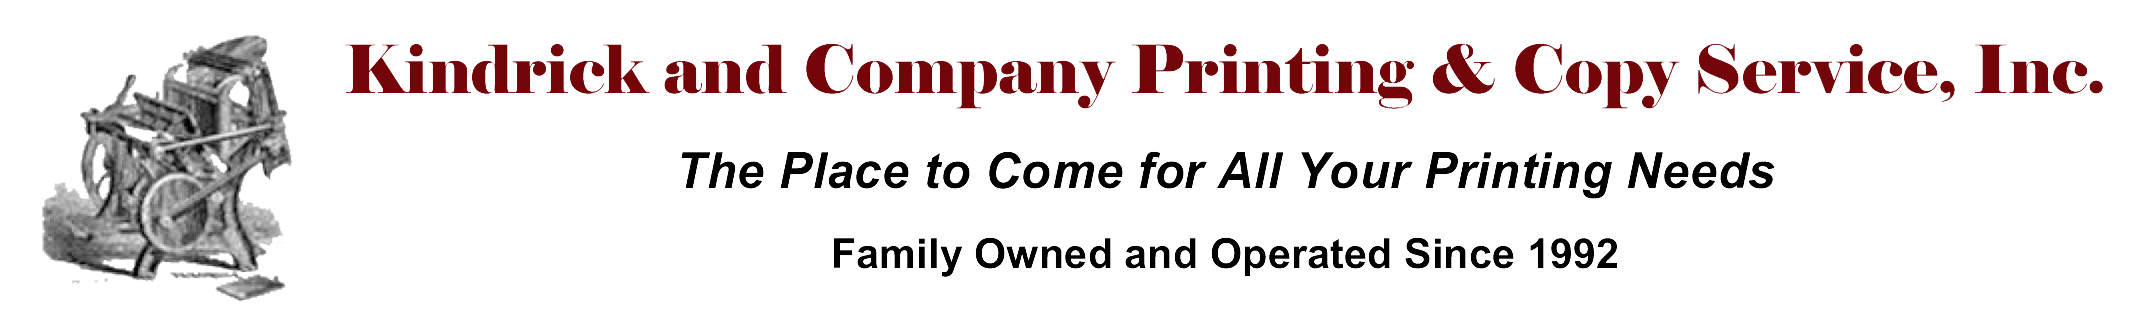 Kindrick and Company Printing & Copy Service, Inc.